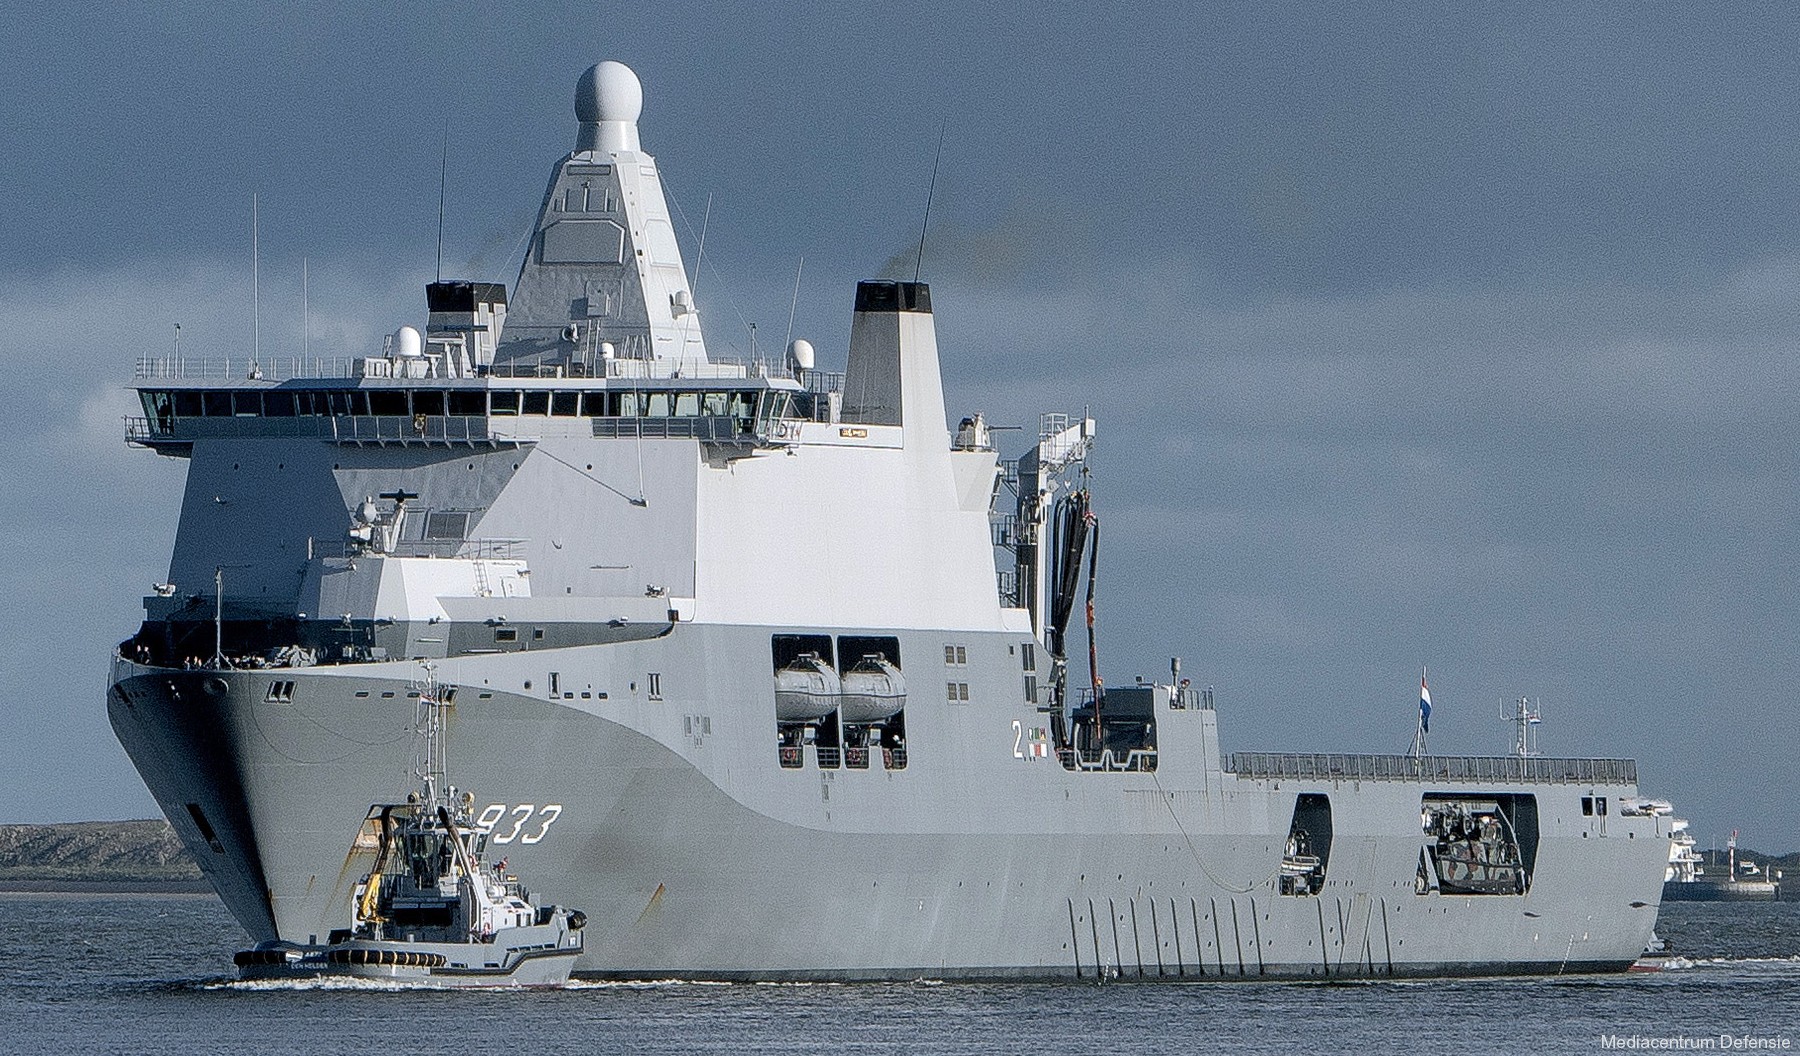 a-833 hnlms karel doorman joint support ship royal netherlands navy koninklijke marine 12